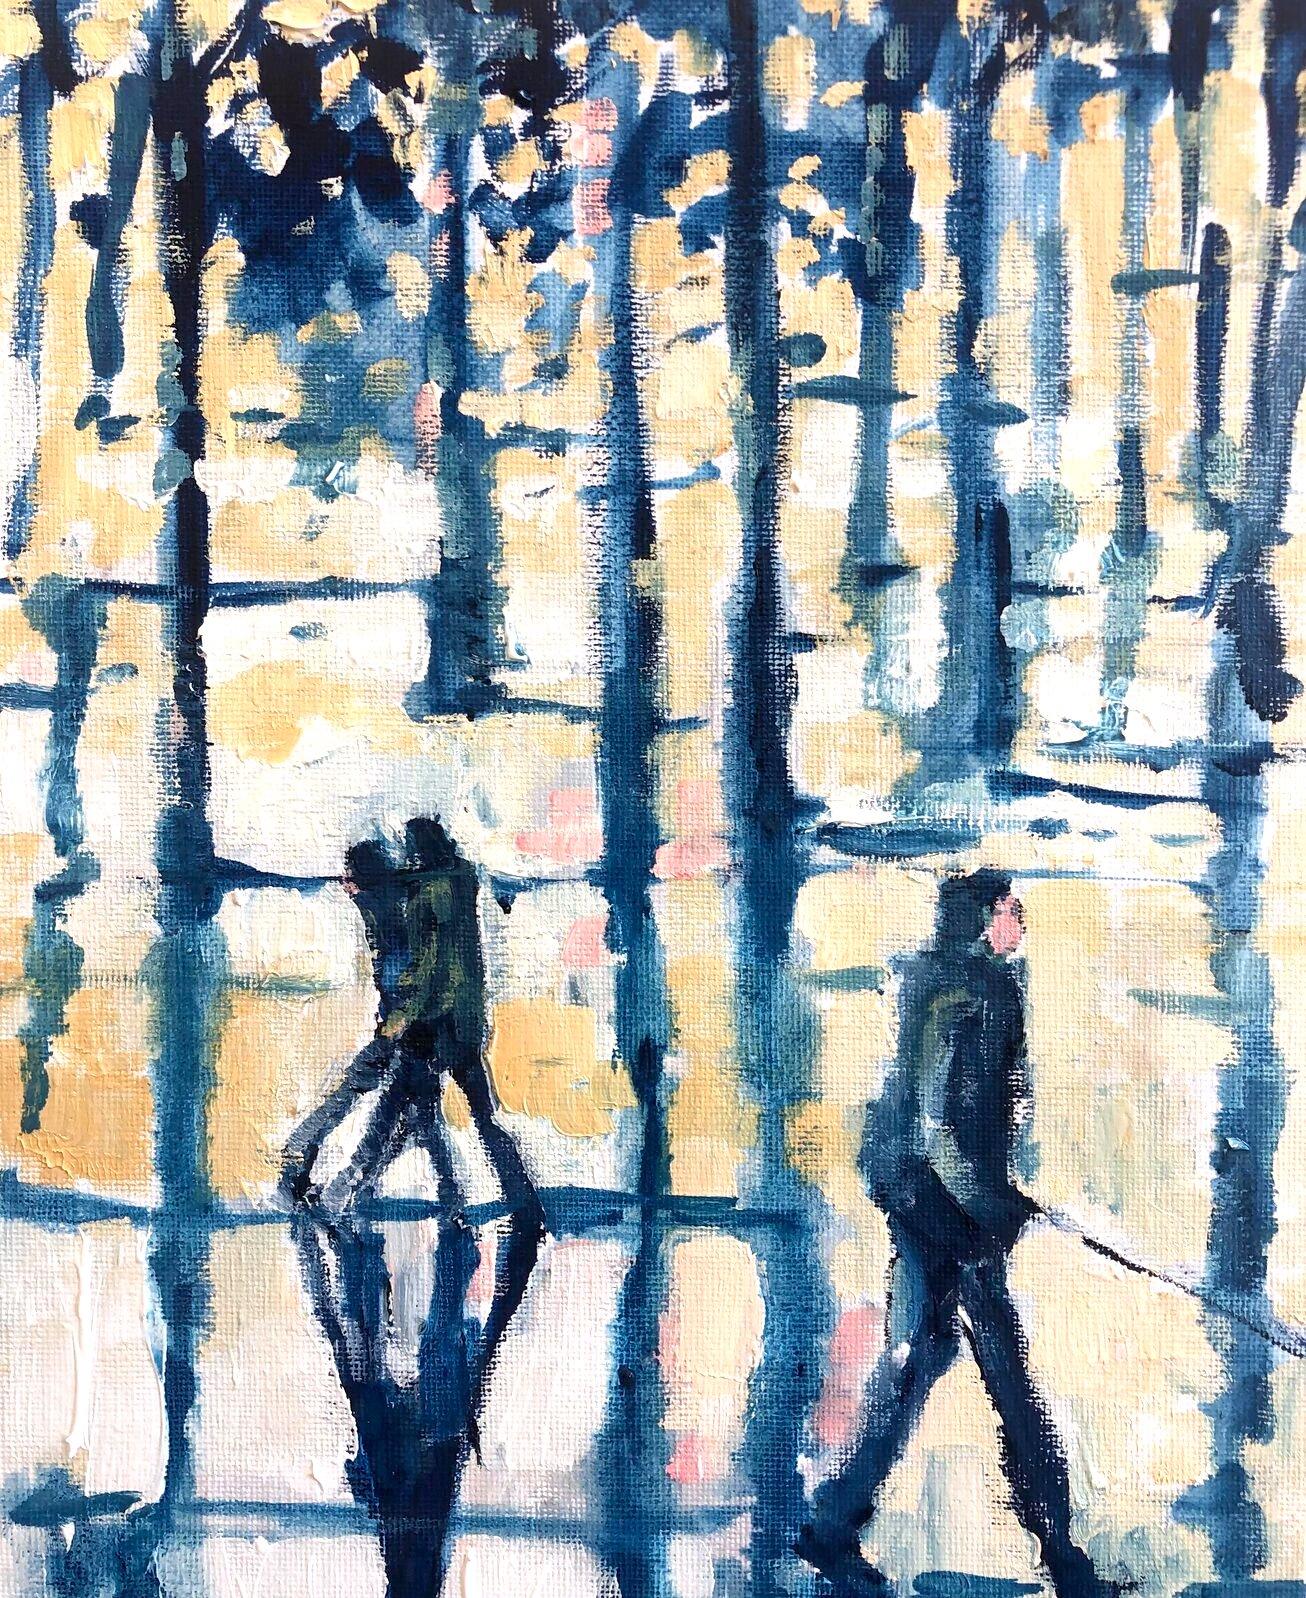 A Walk in The Park-original impressionism figurative landscape oil painting-art